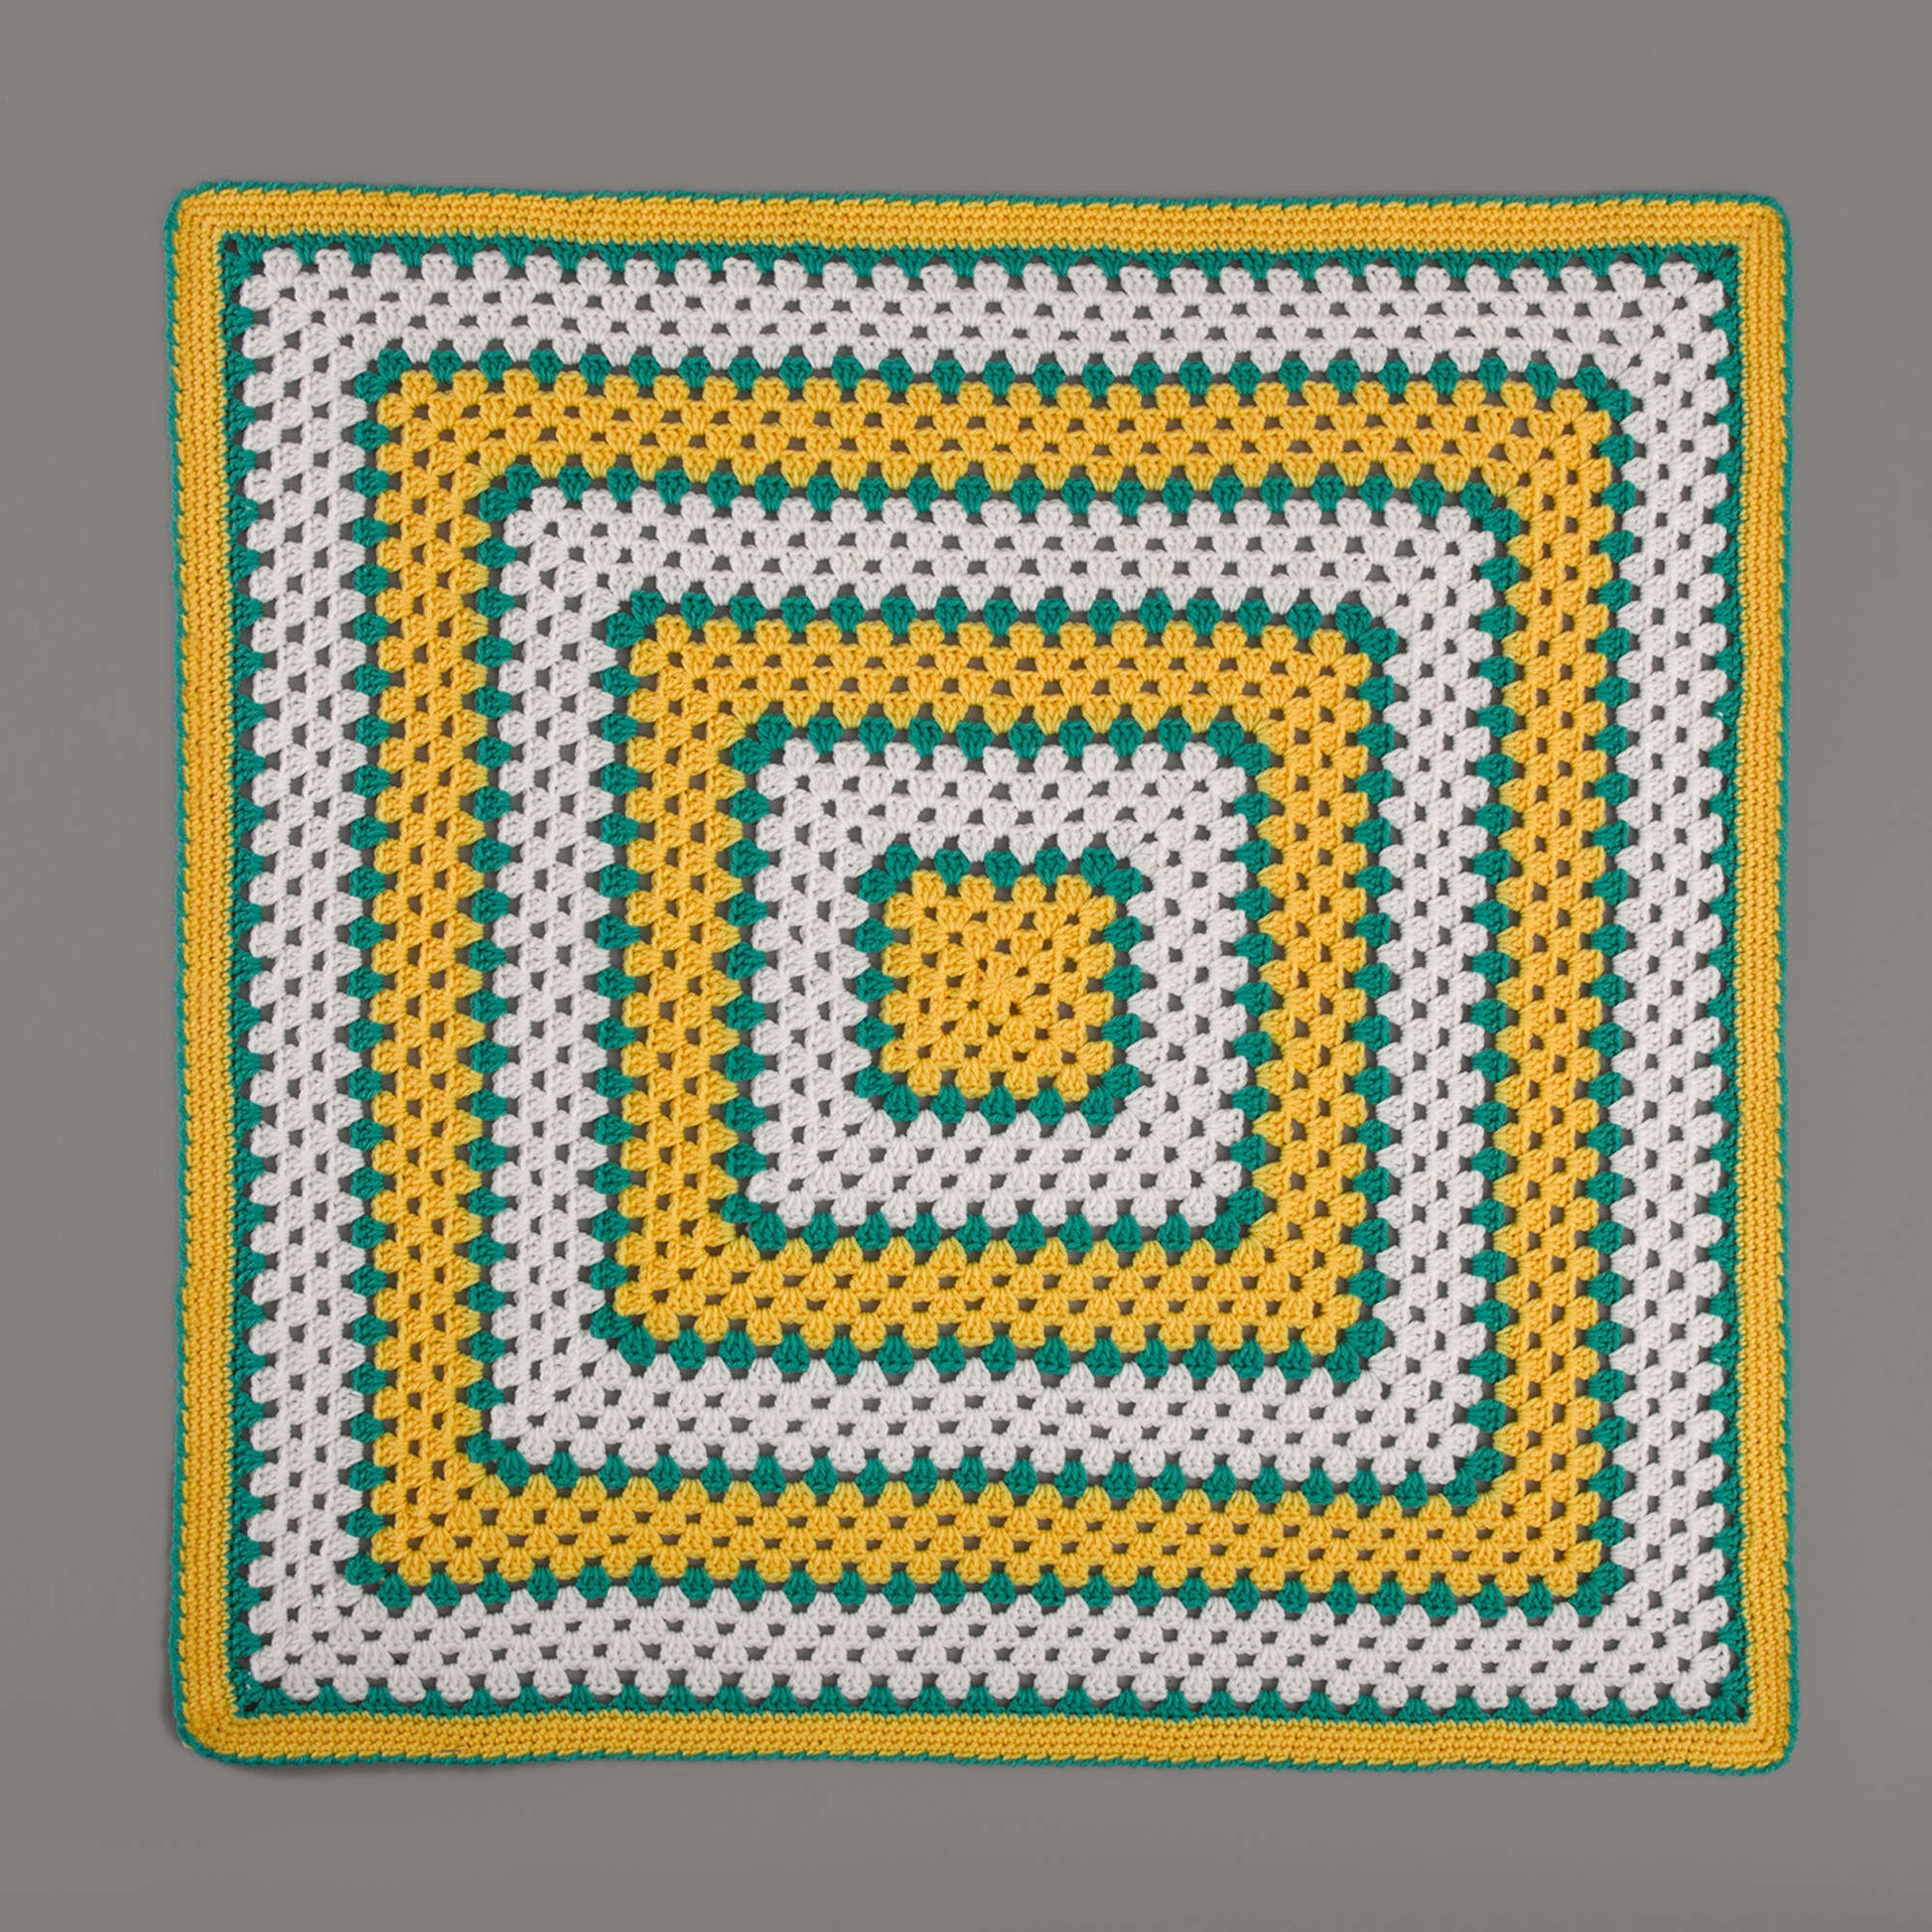 Free Red Heart Makin' Squares Crochet Blanket Pattern